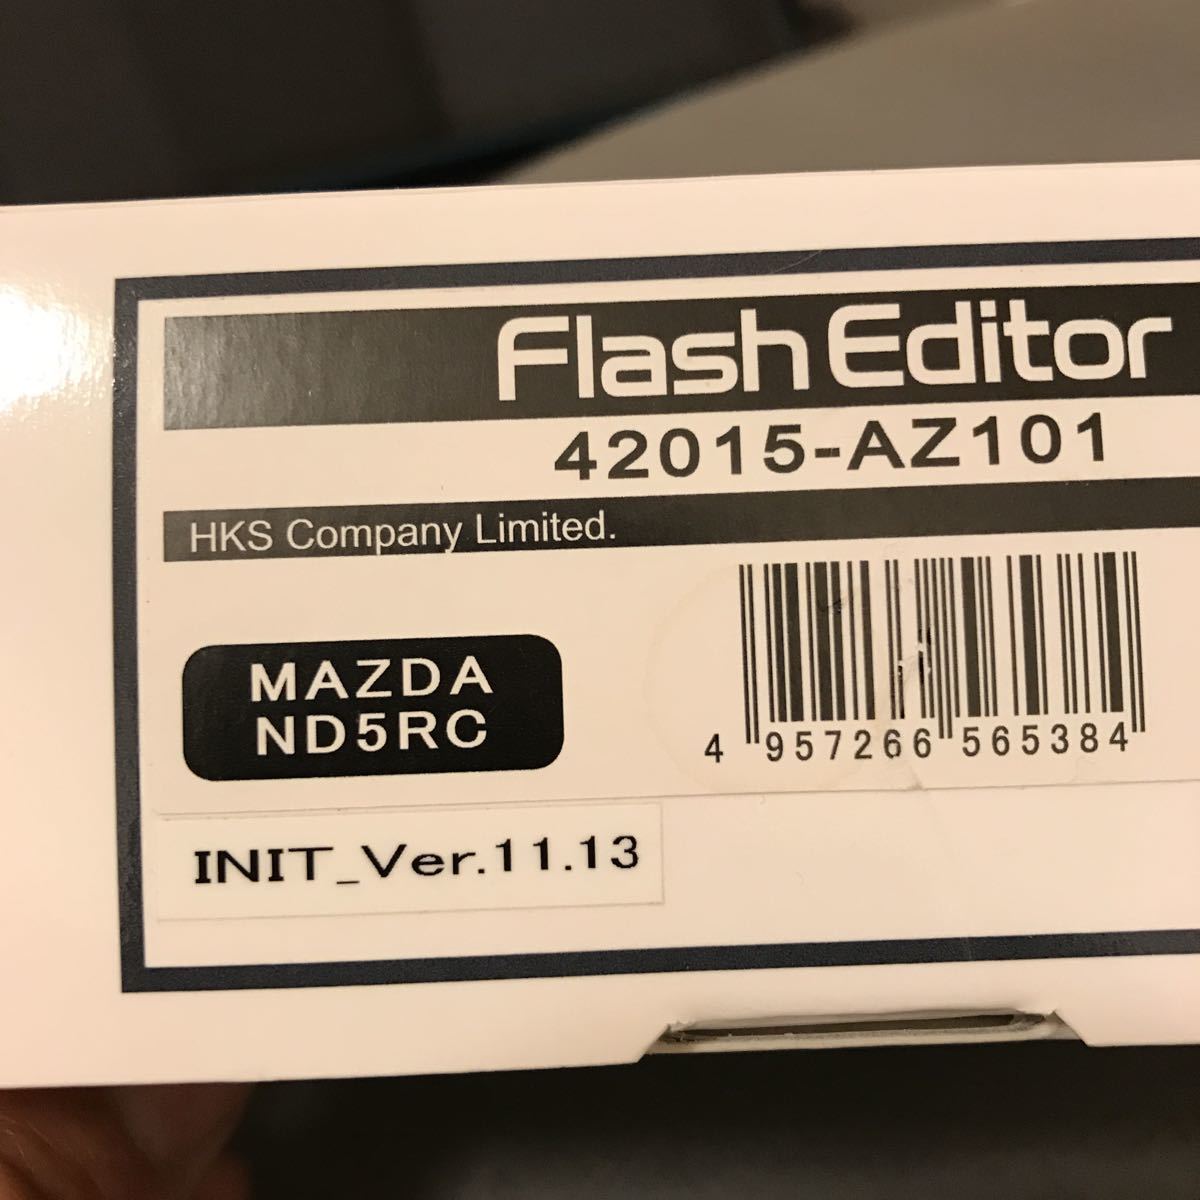 HKS Flash Editor flash Editor - Mazda Roadster ND for 